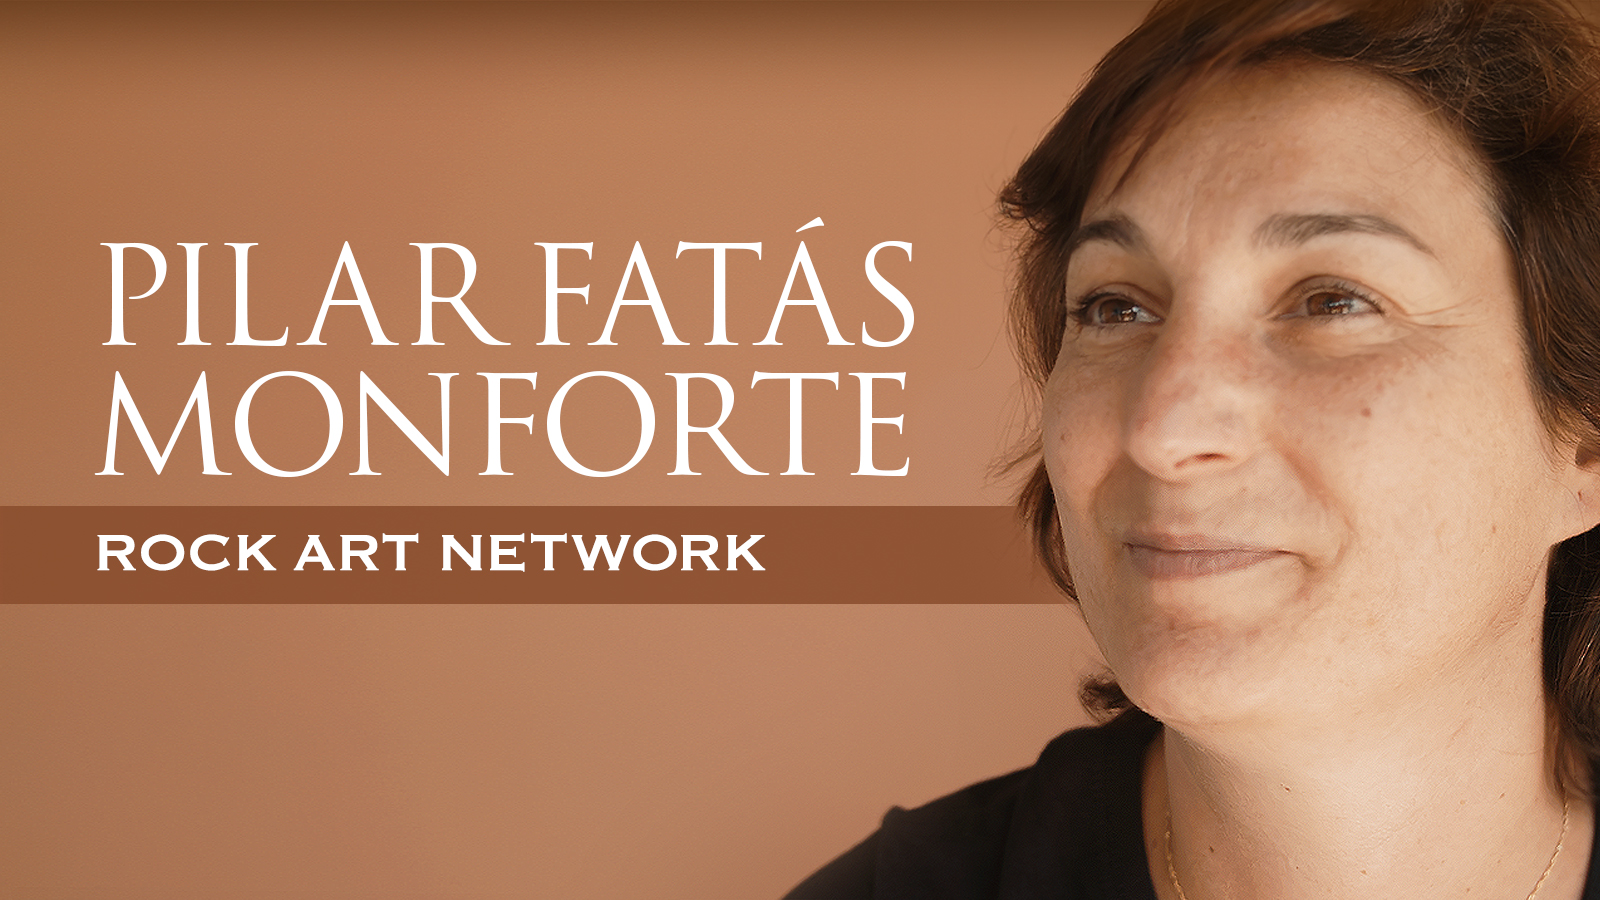 The Rock Art Network Pilar Fatás Monforte